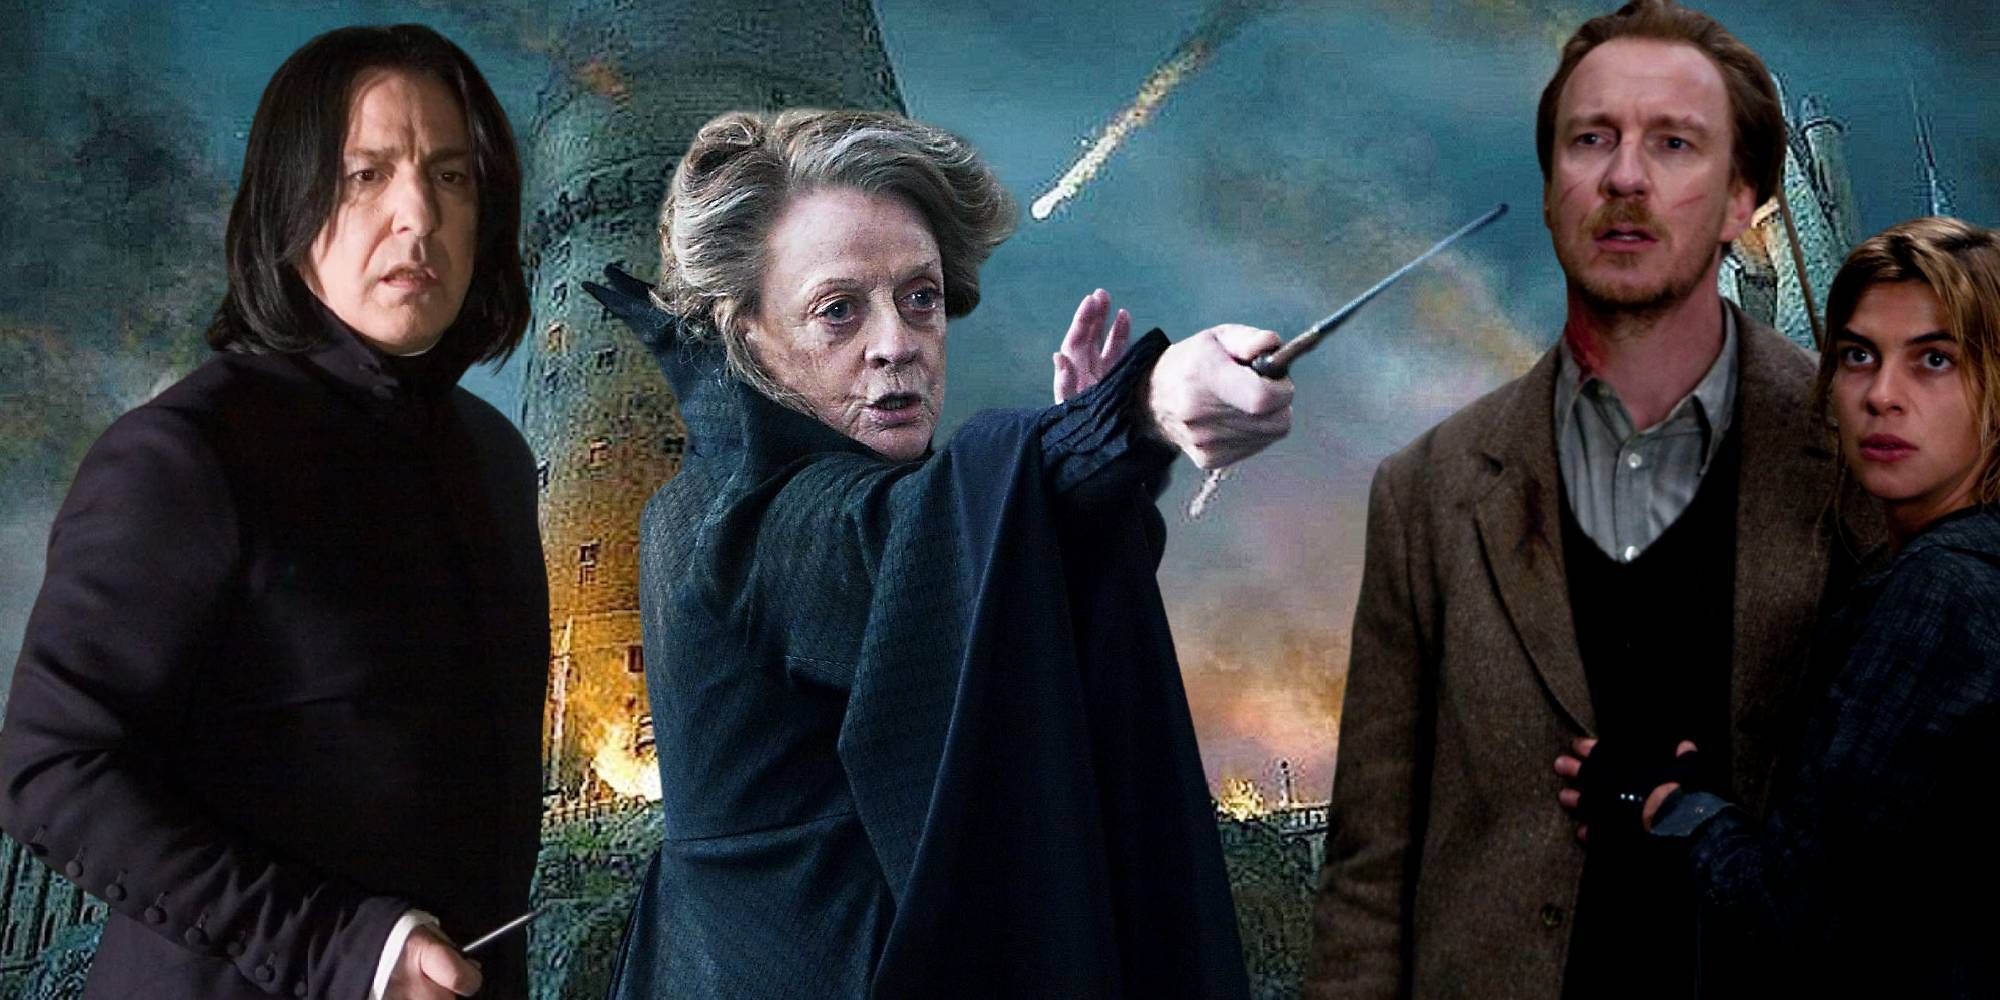 Snape, McGonagall, Lupin and Tonks at the Battle of Hogwarts Original Image